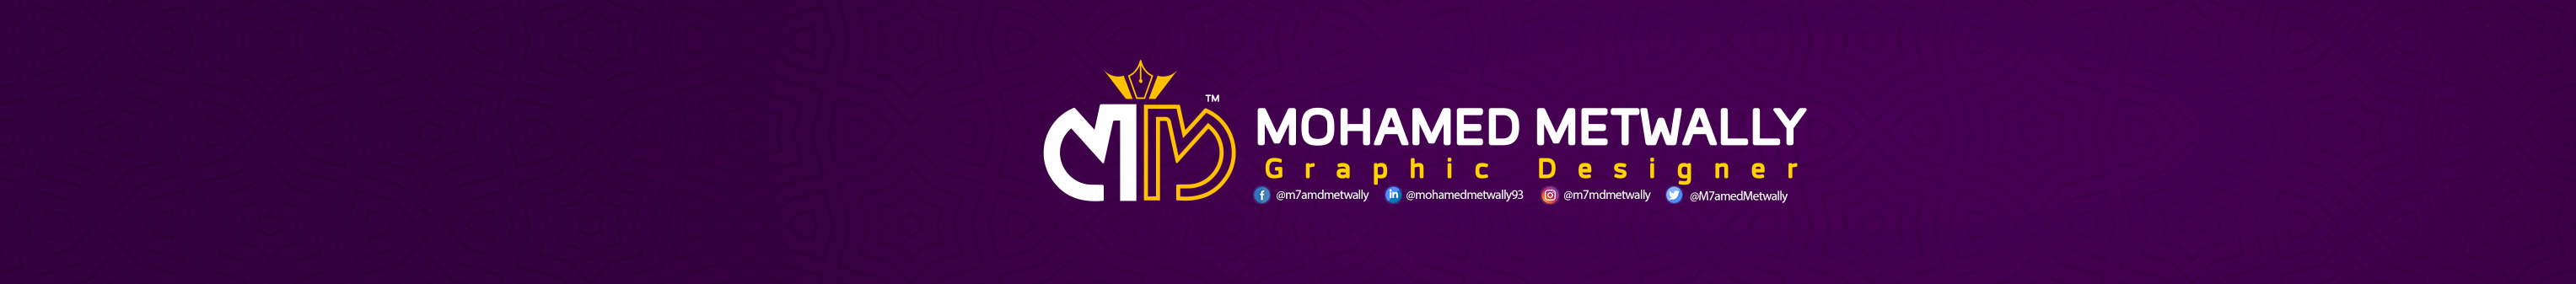 Mohamed Metwally's profile banner